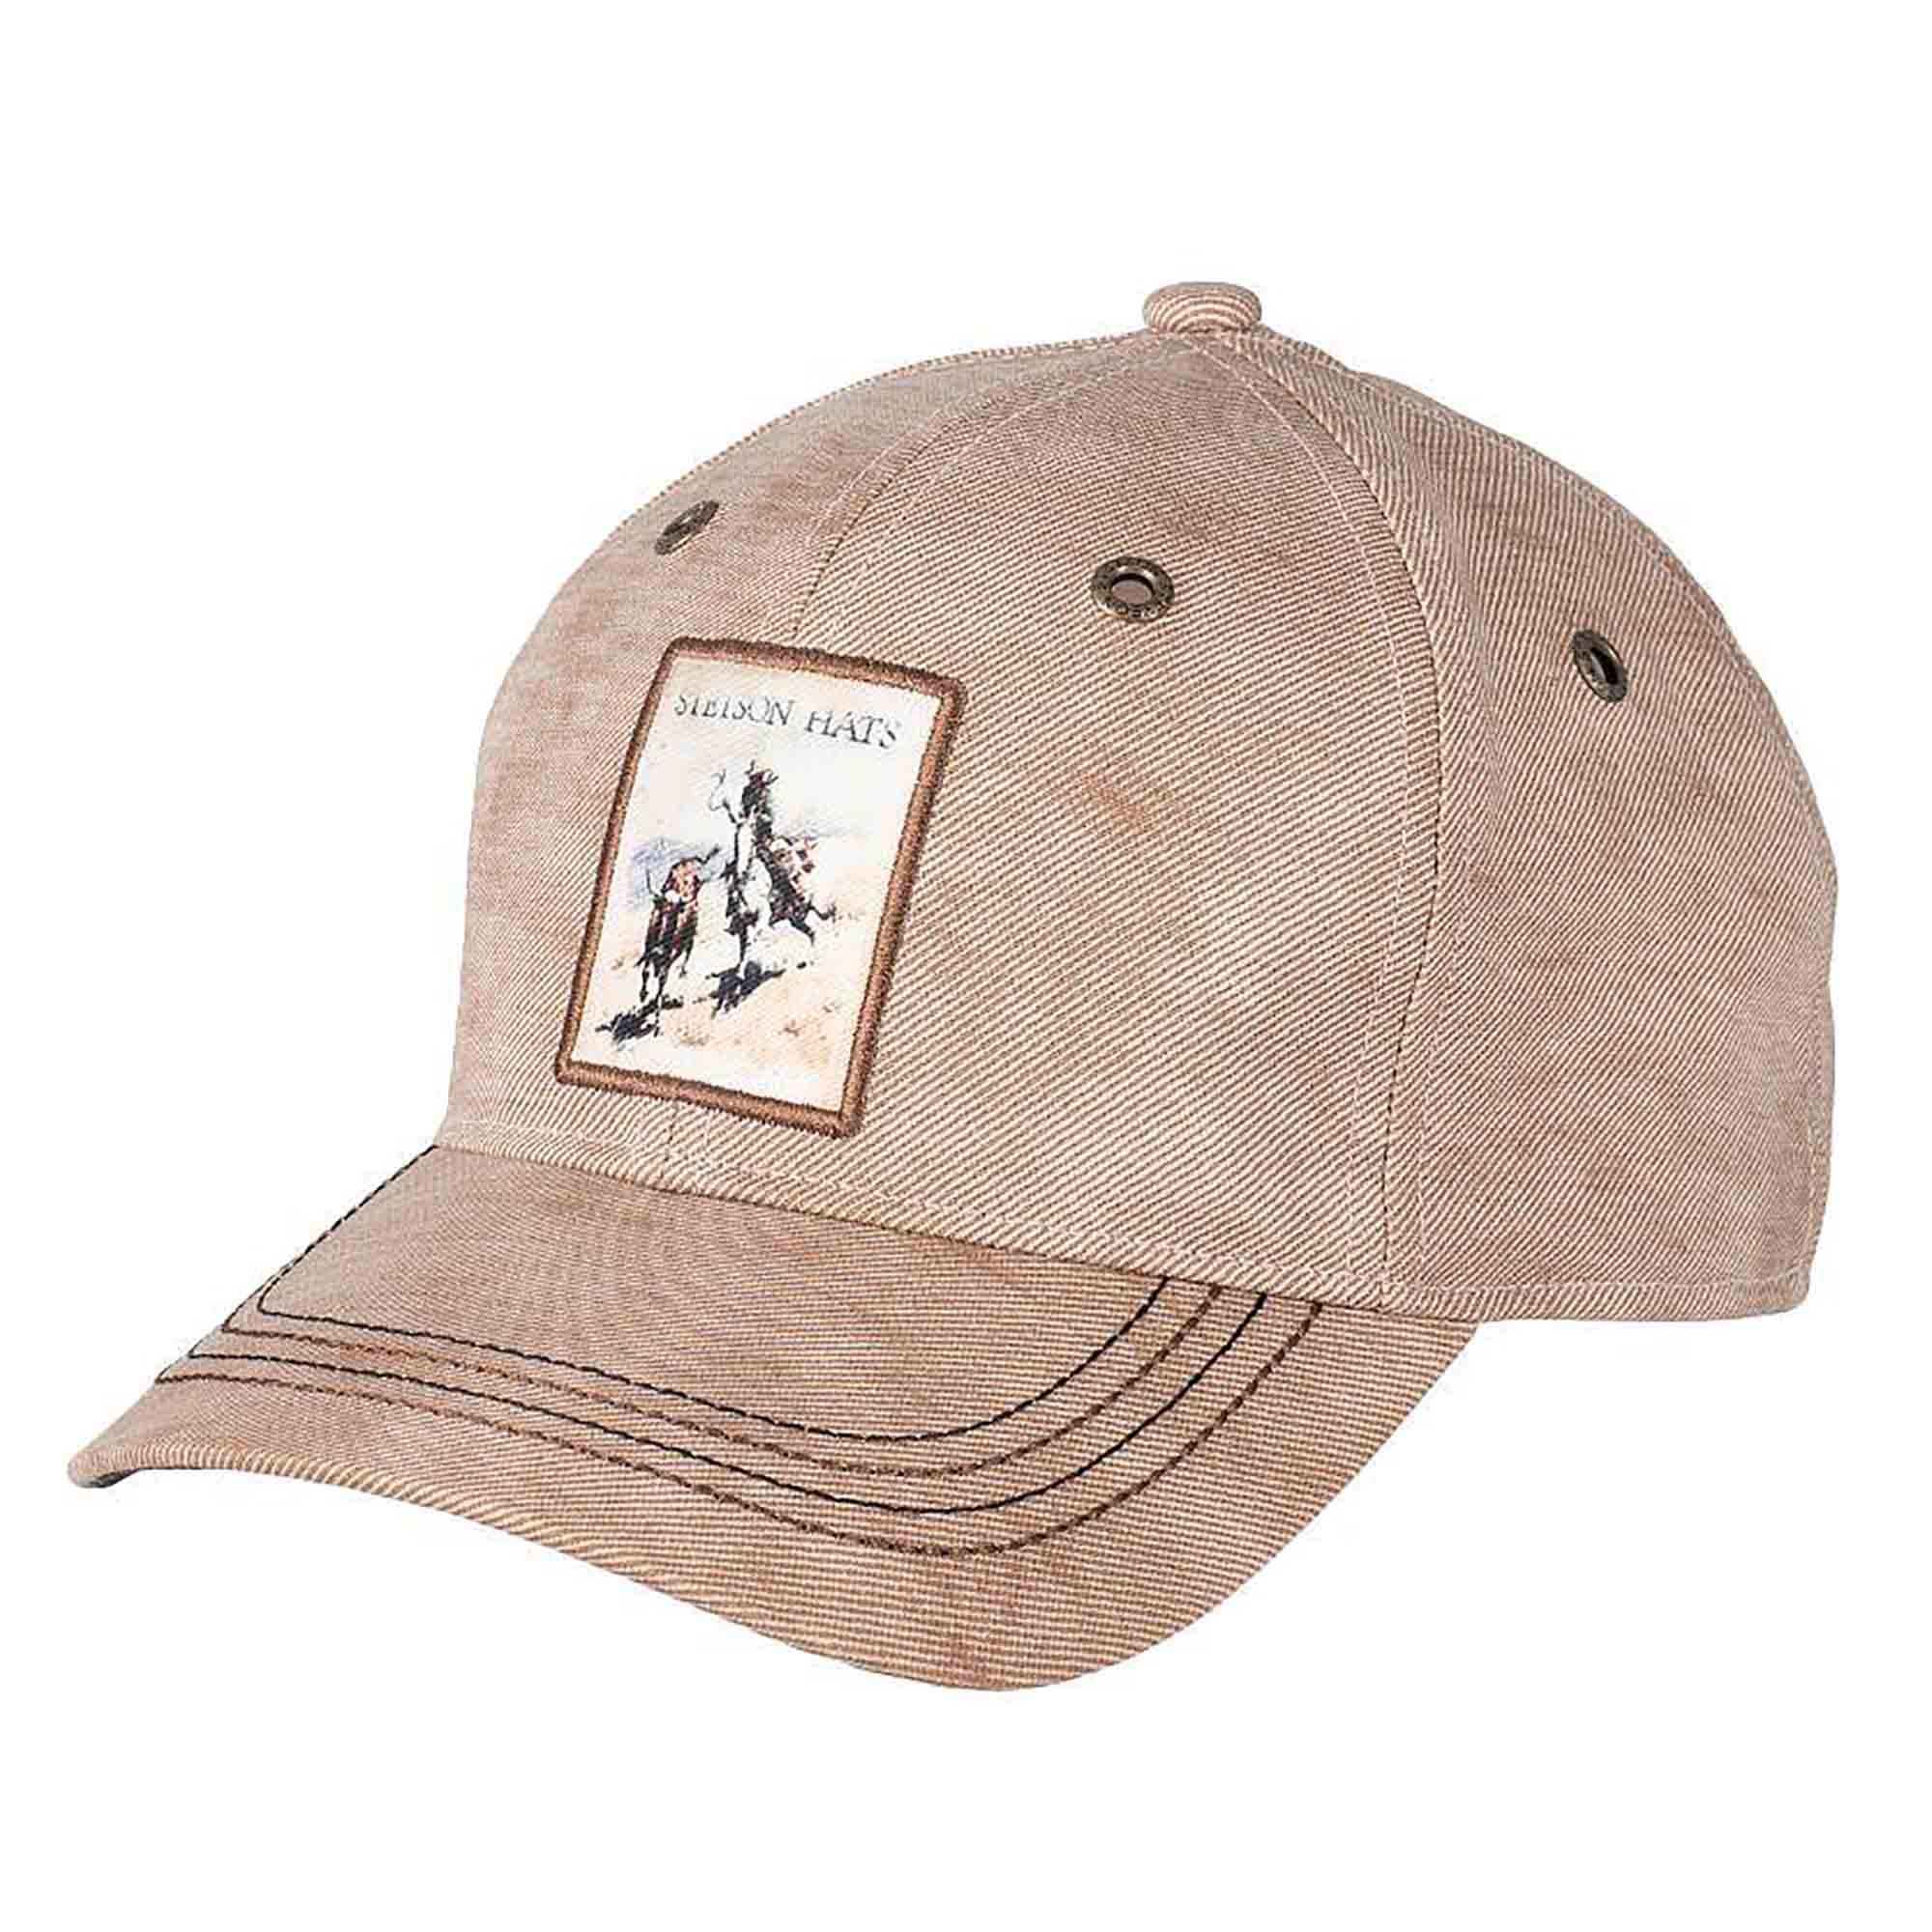 Roper Structured Timber Cloth Baseball Cap - Stetson Hat Cap Stetson Hats STC397-TAN Tan OS 